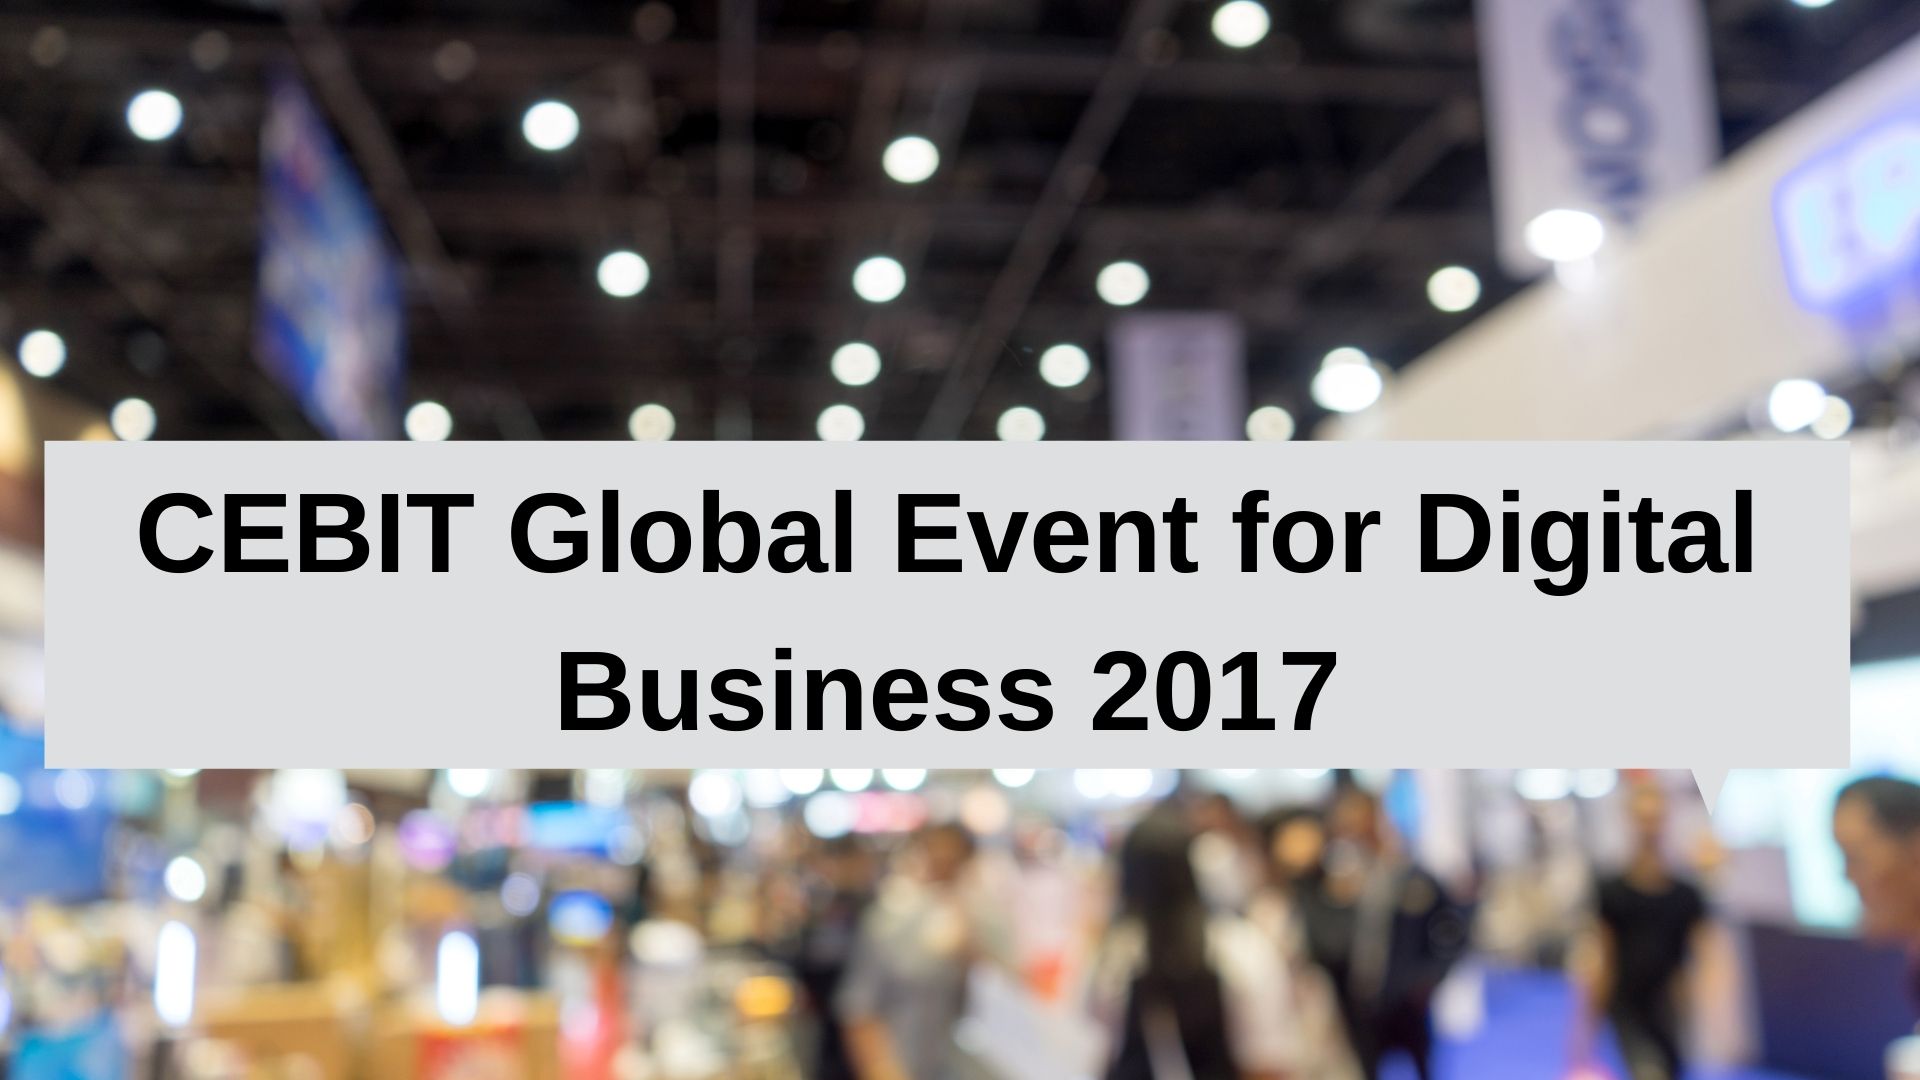 https://www.groundlabs.com/wp-content/uploads/2017/03/CEBIT-Global-Event-for-Digital-Business-2017.jpg